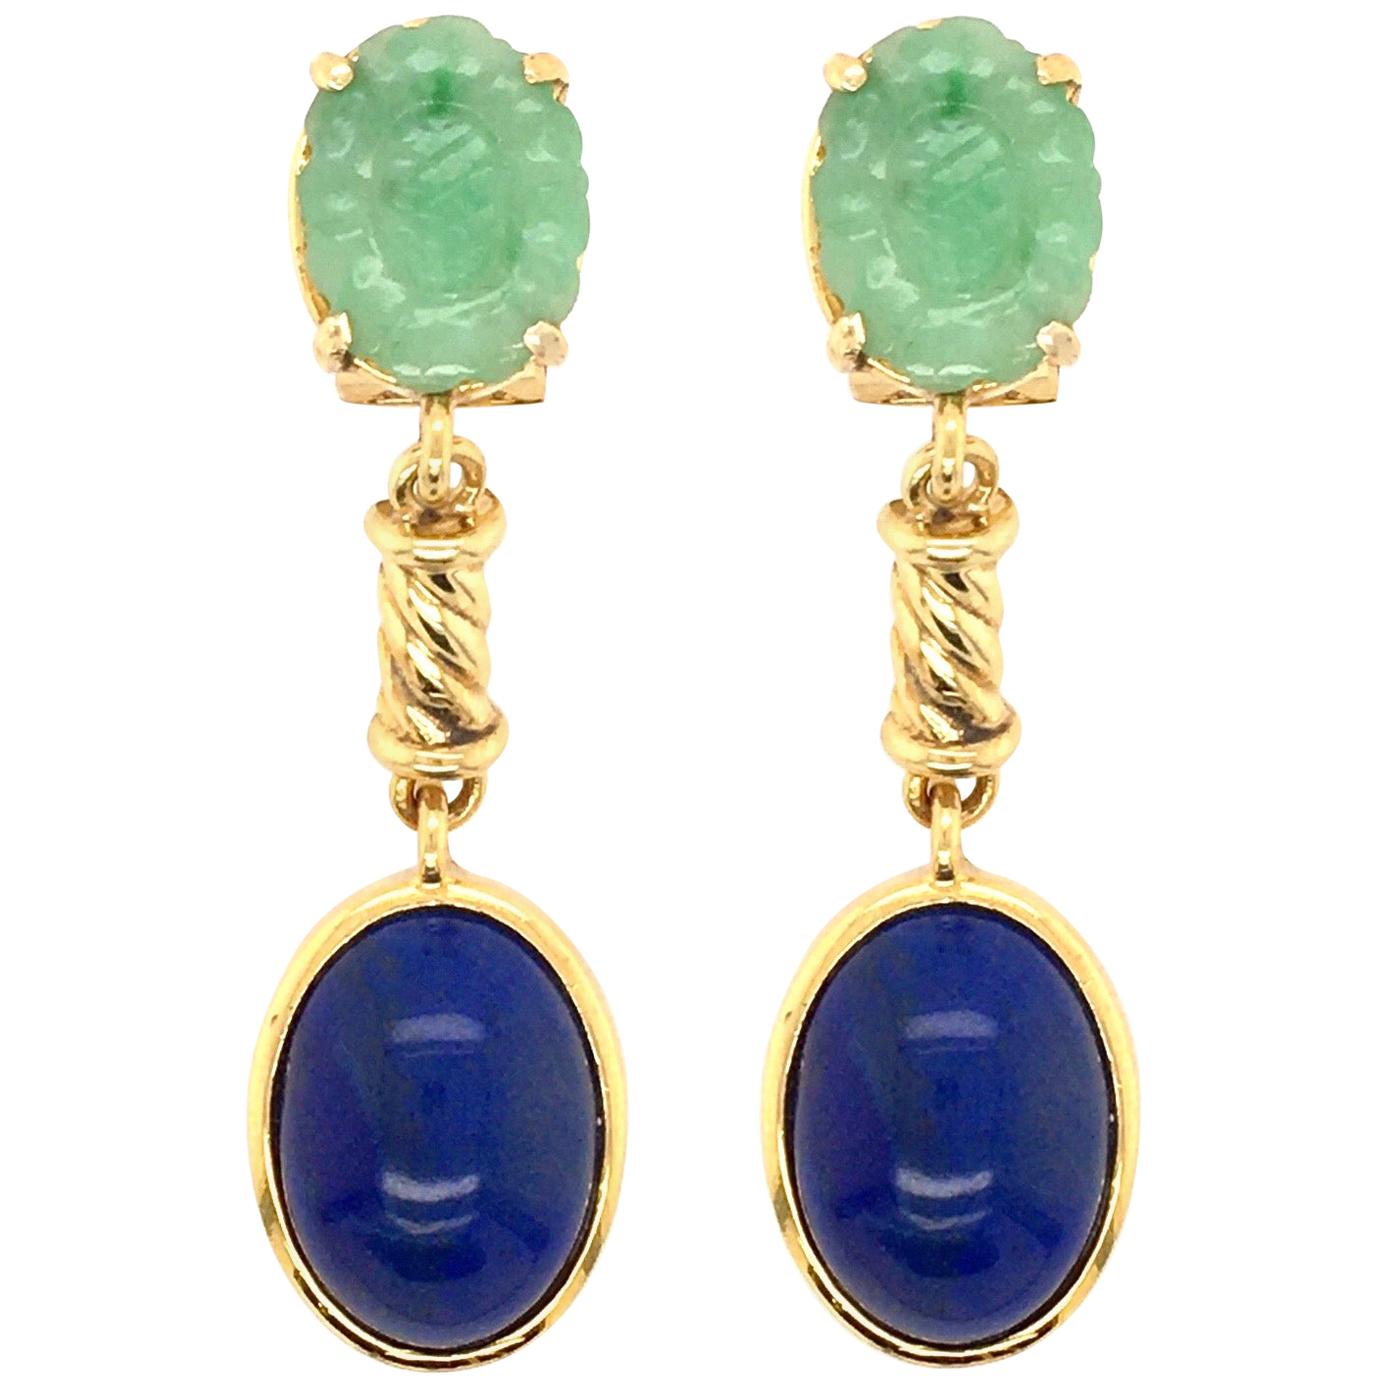 Pair of Gold, Jade and Lapis Lazuli Earrings